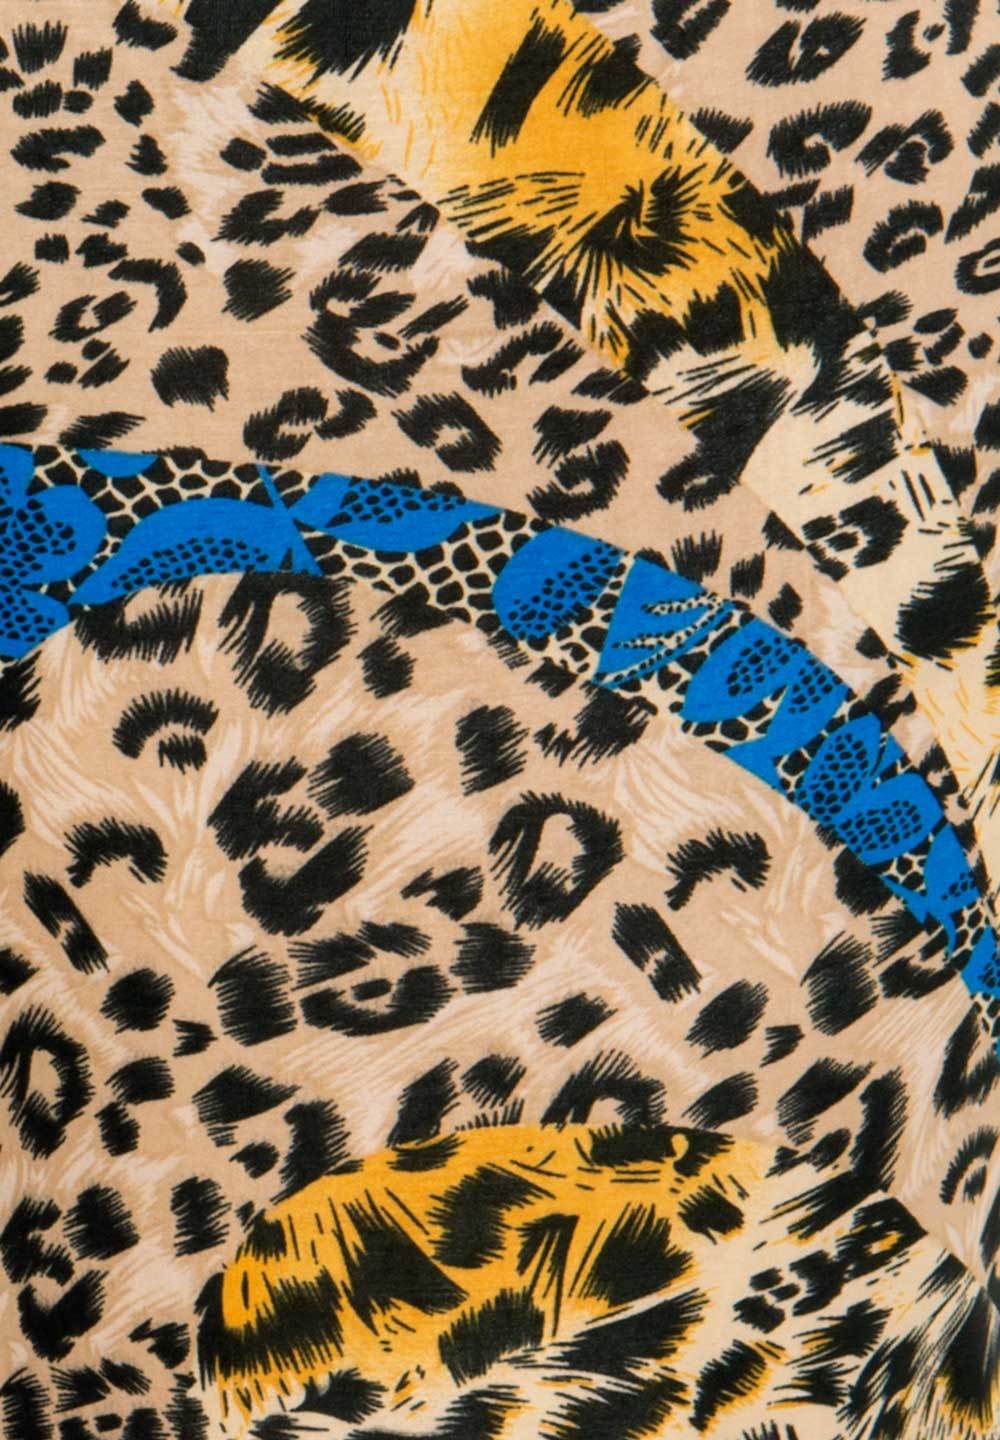 blue-leopard